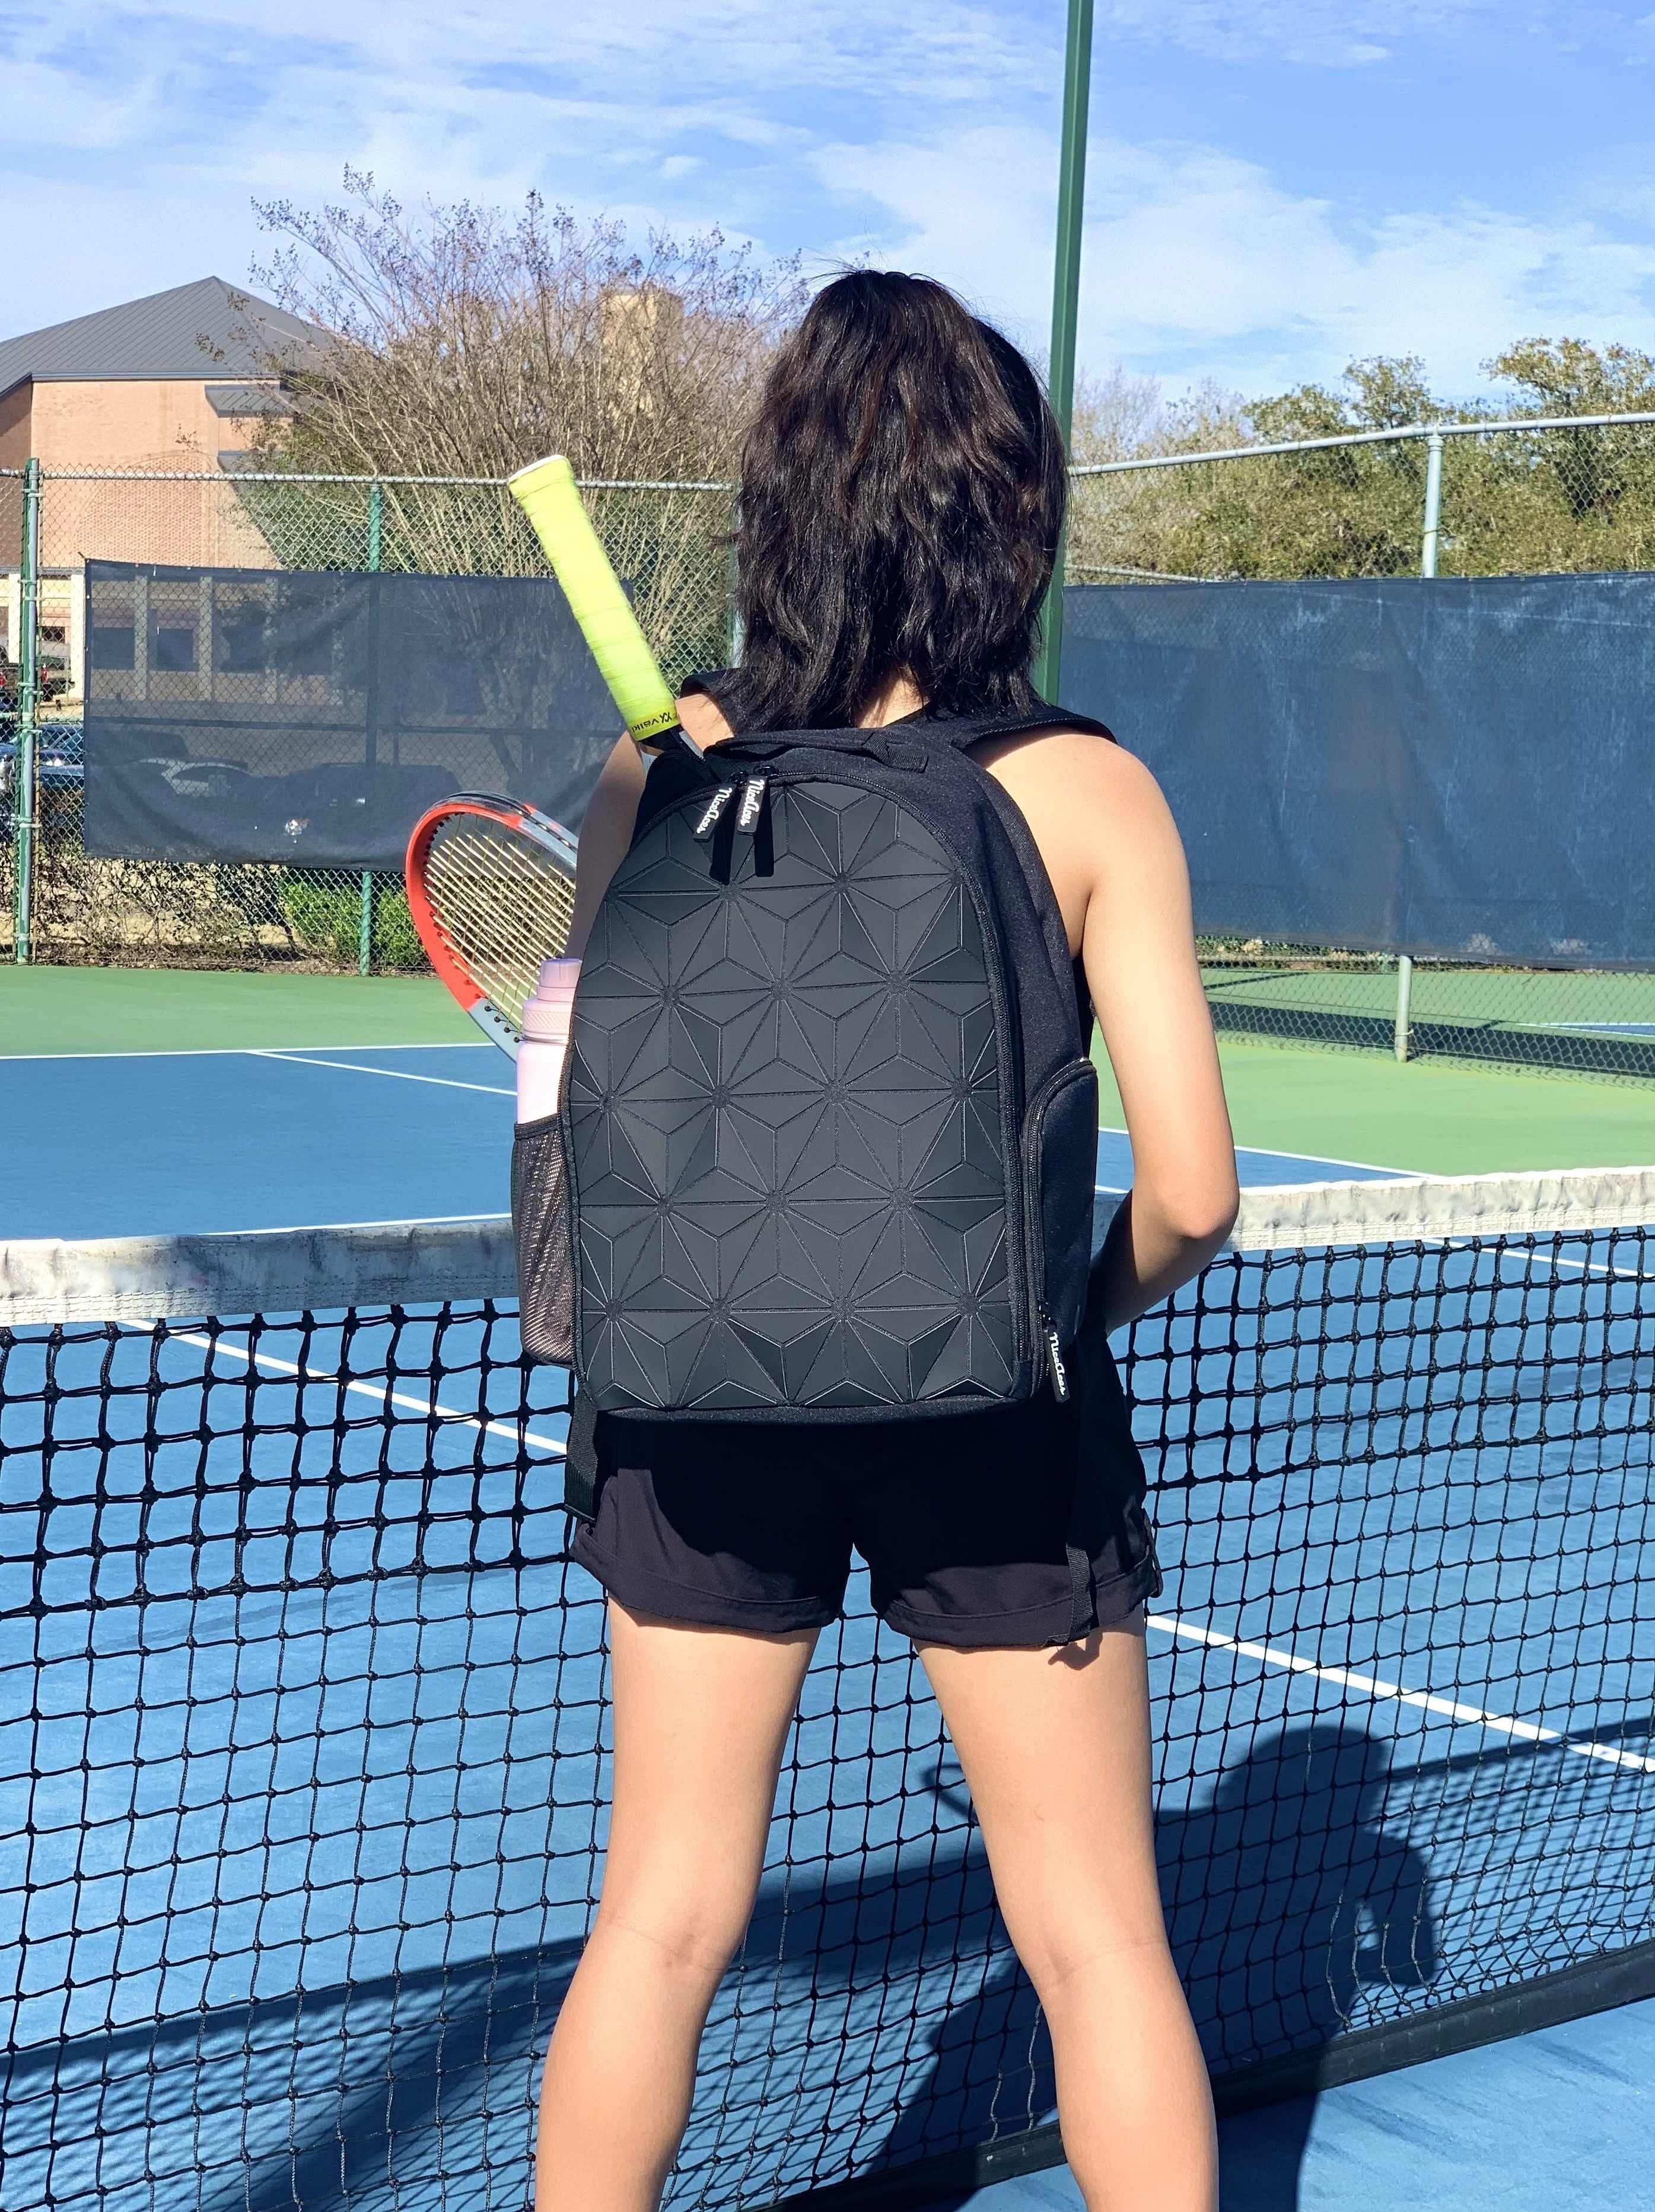 Cool Design Bag; Best For Tennis Backpack; Pickleball Bag; School Backpack; Gym Bag and Travel Backpack; Separated Fit 2 Rackets